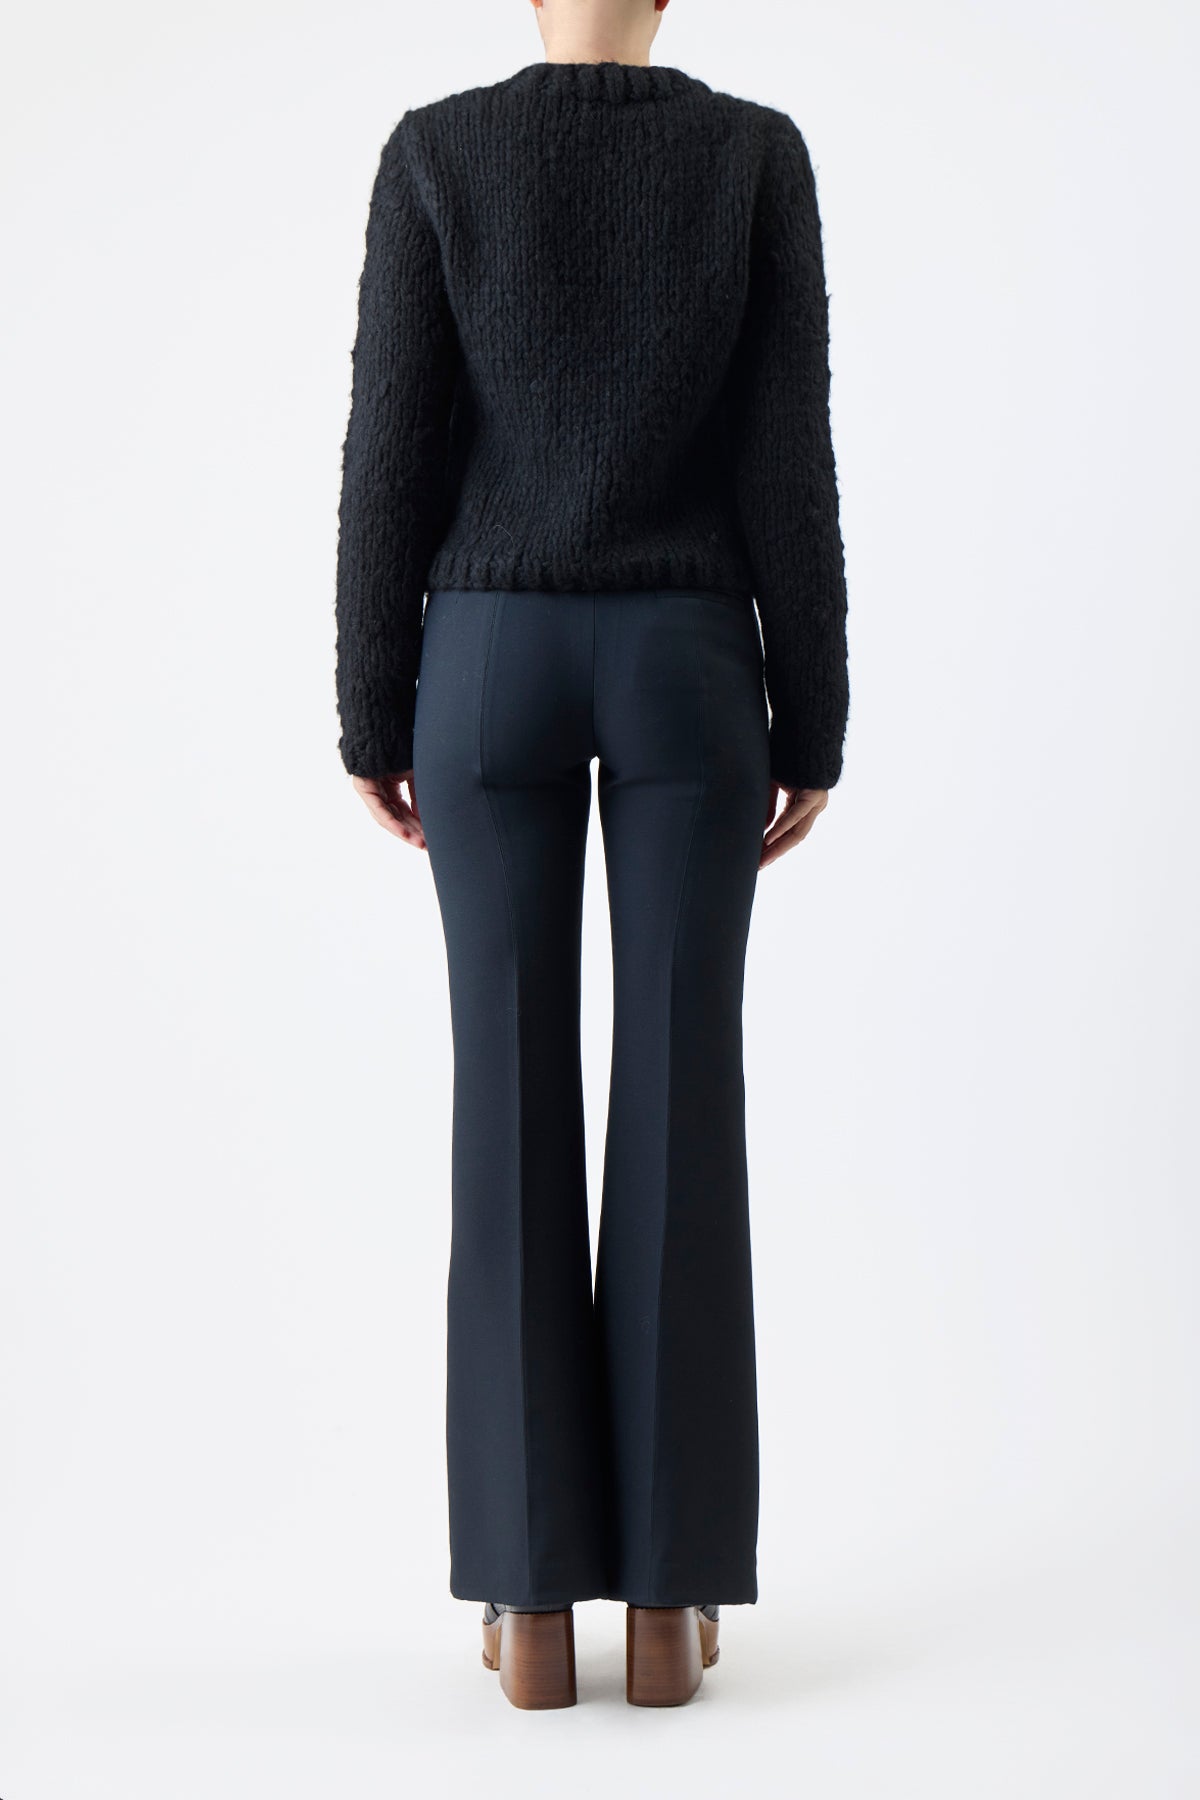 Dalton Knit Sweater in Black Welfat Cashmere